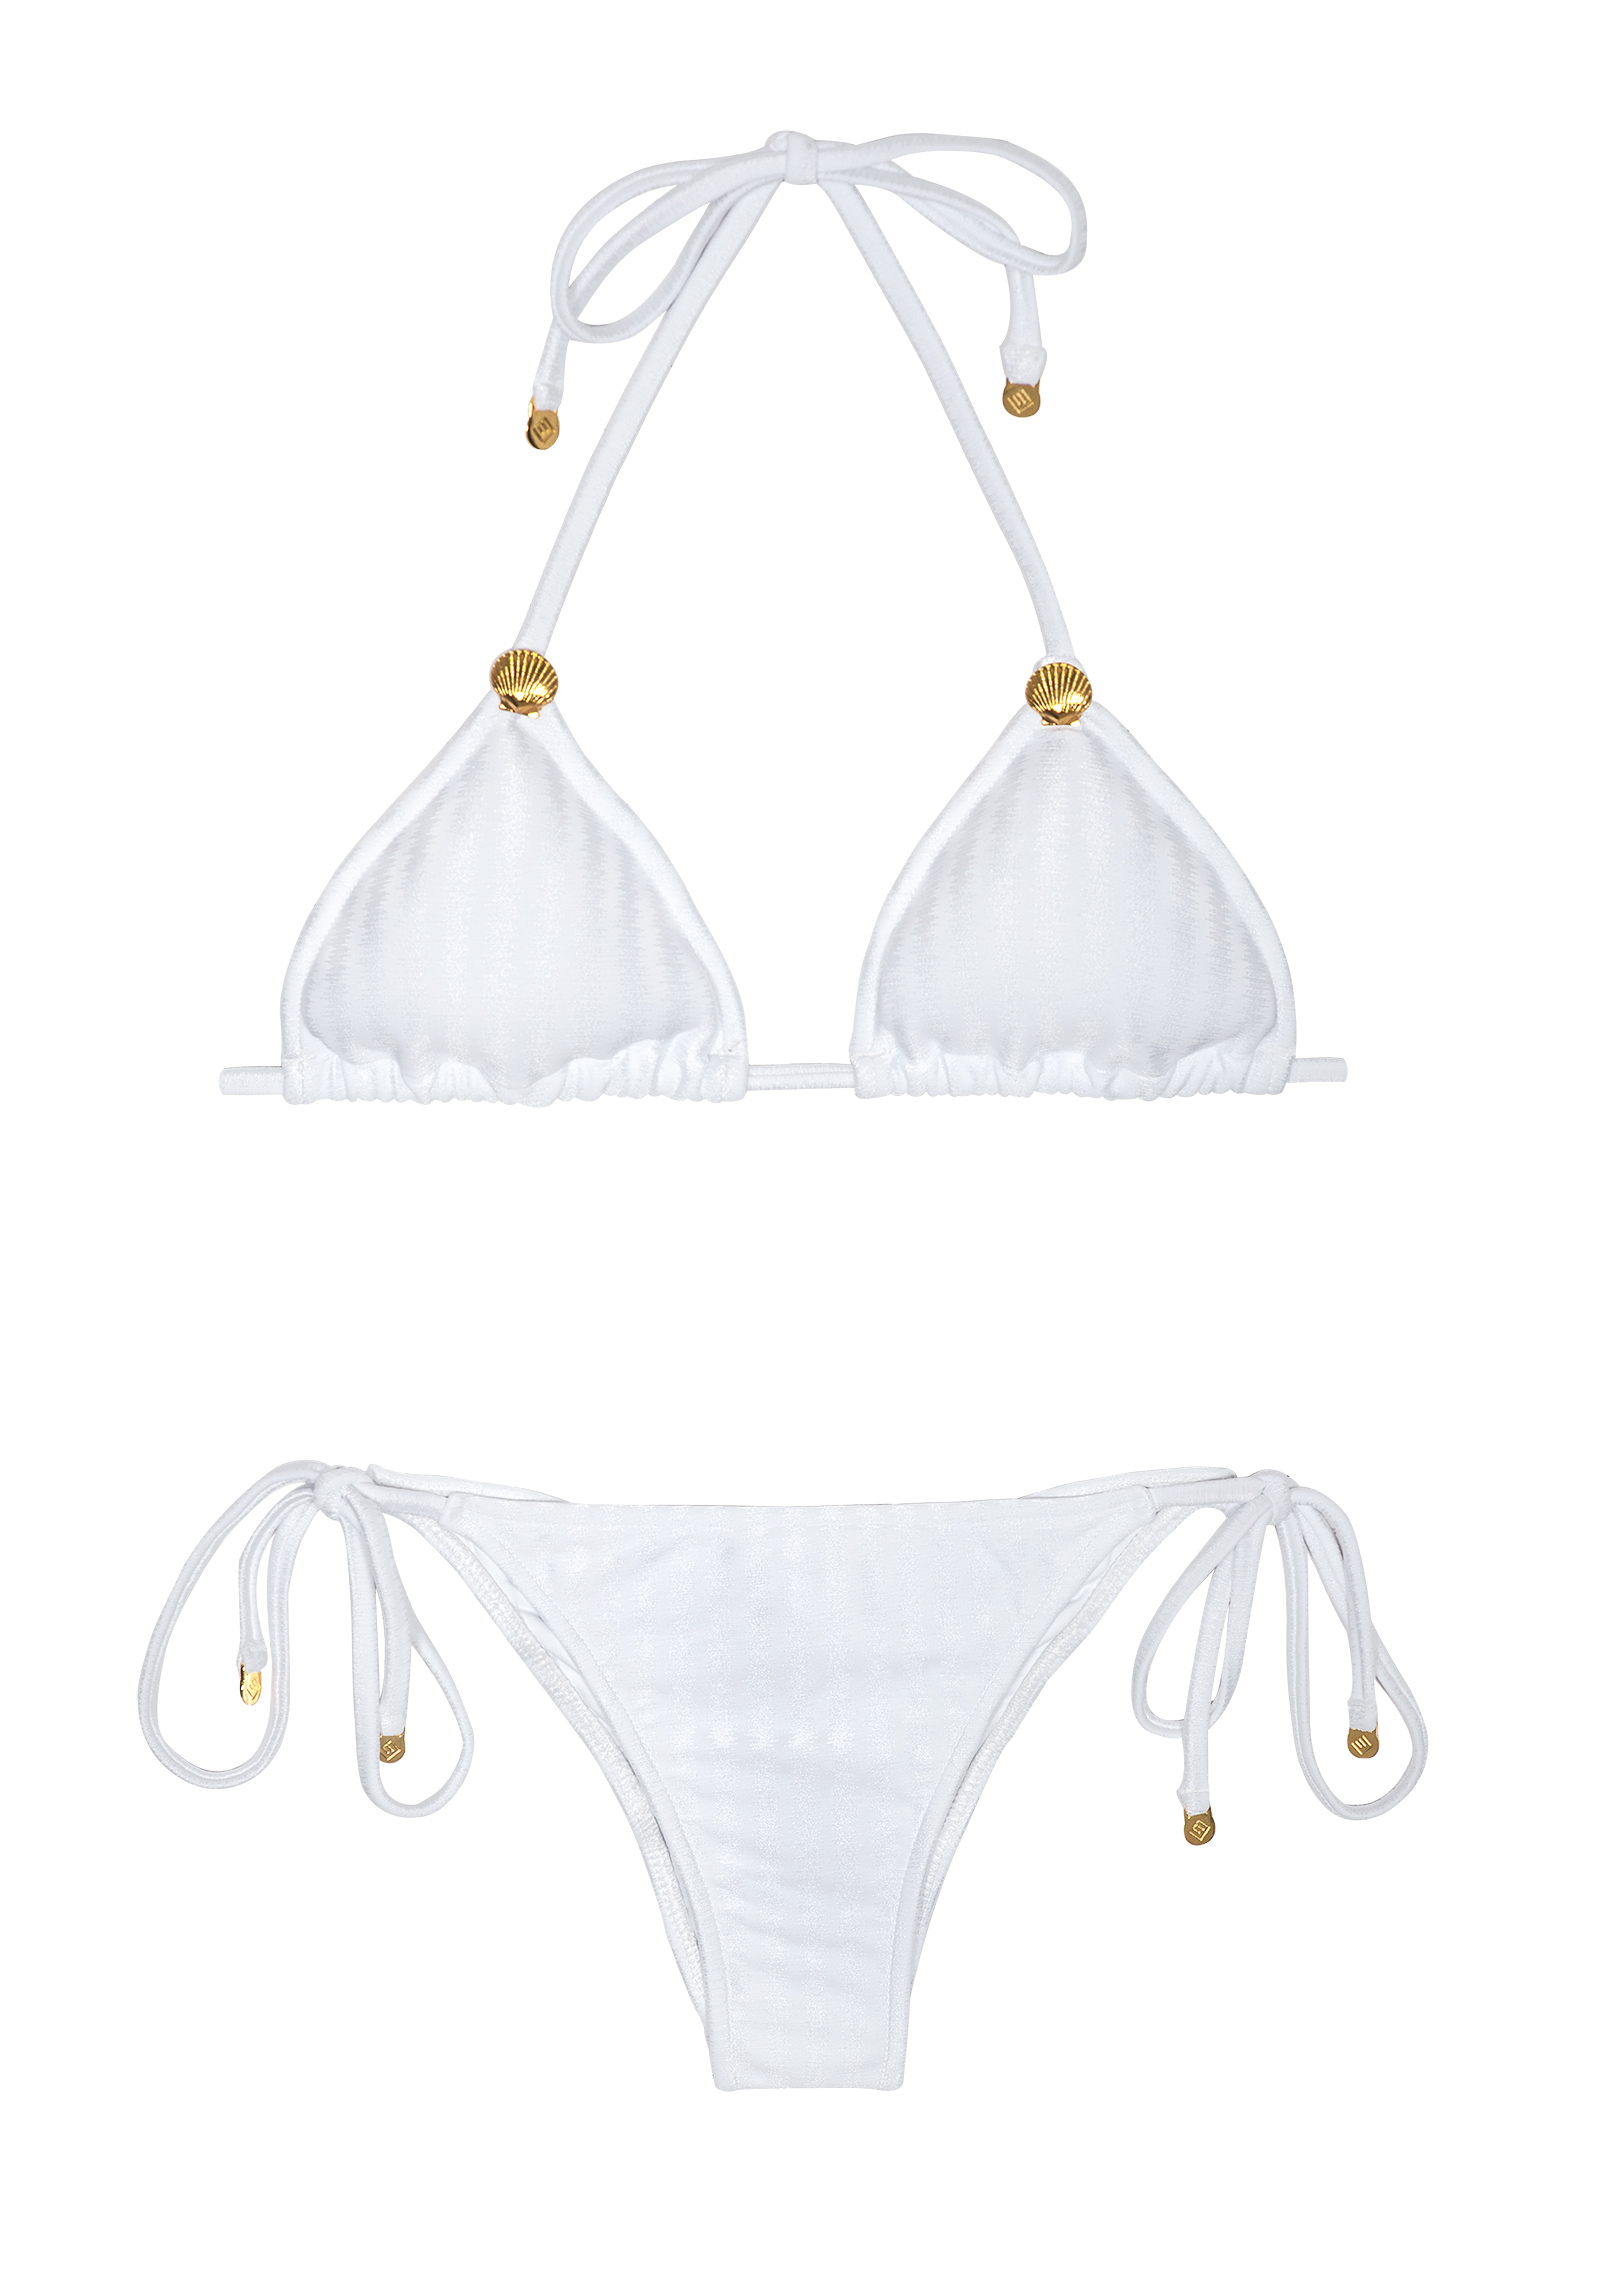 Iridescent White Triangle Bikini With Shell Decorations - Shell Ikat White